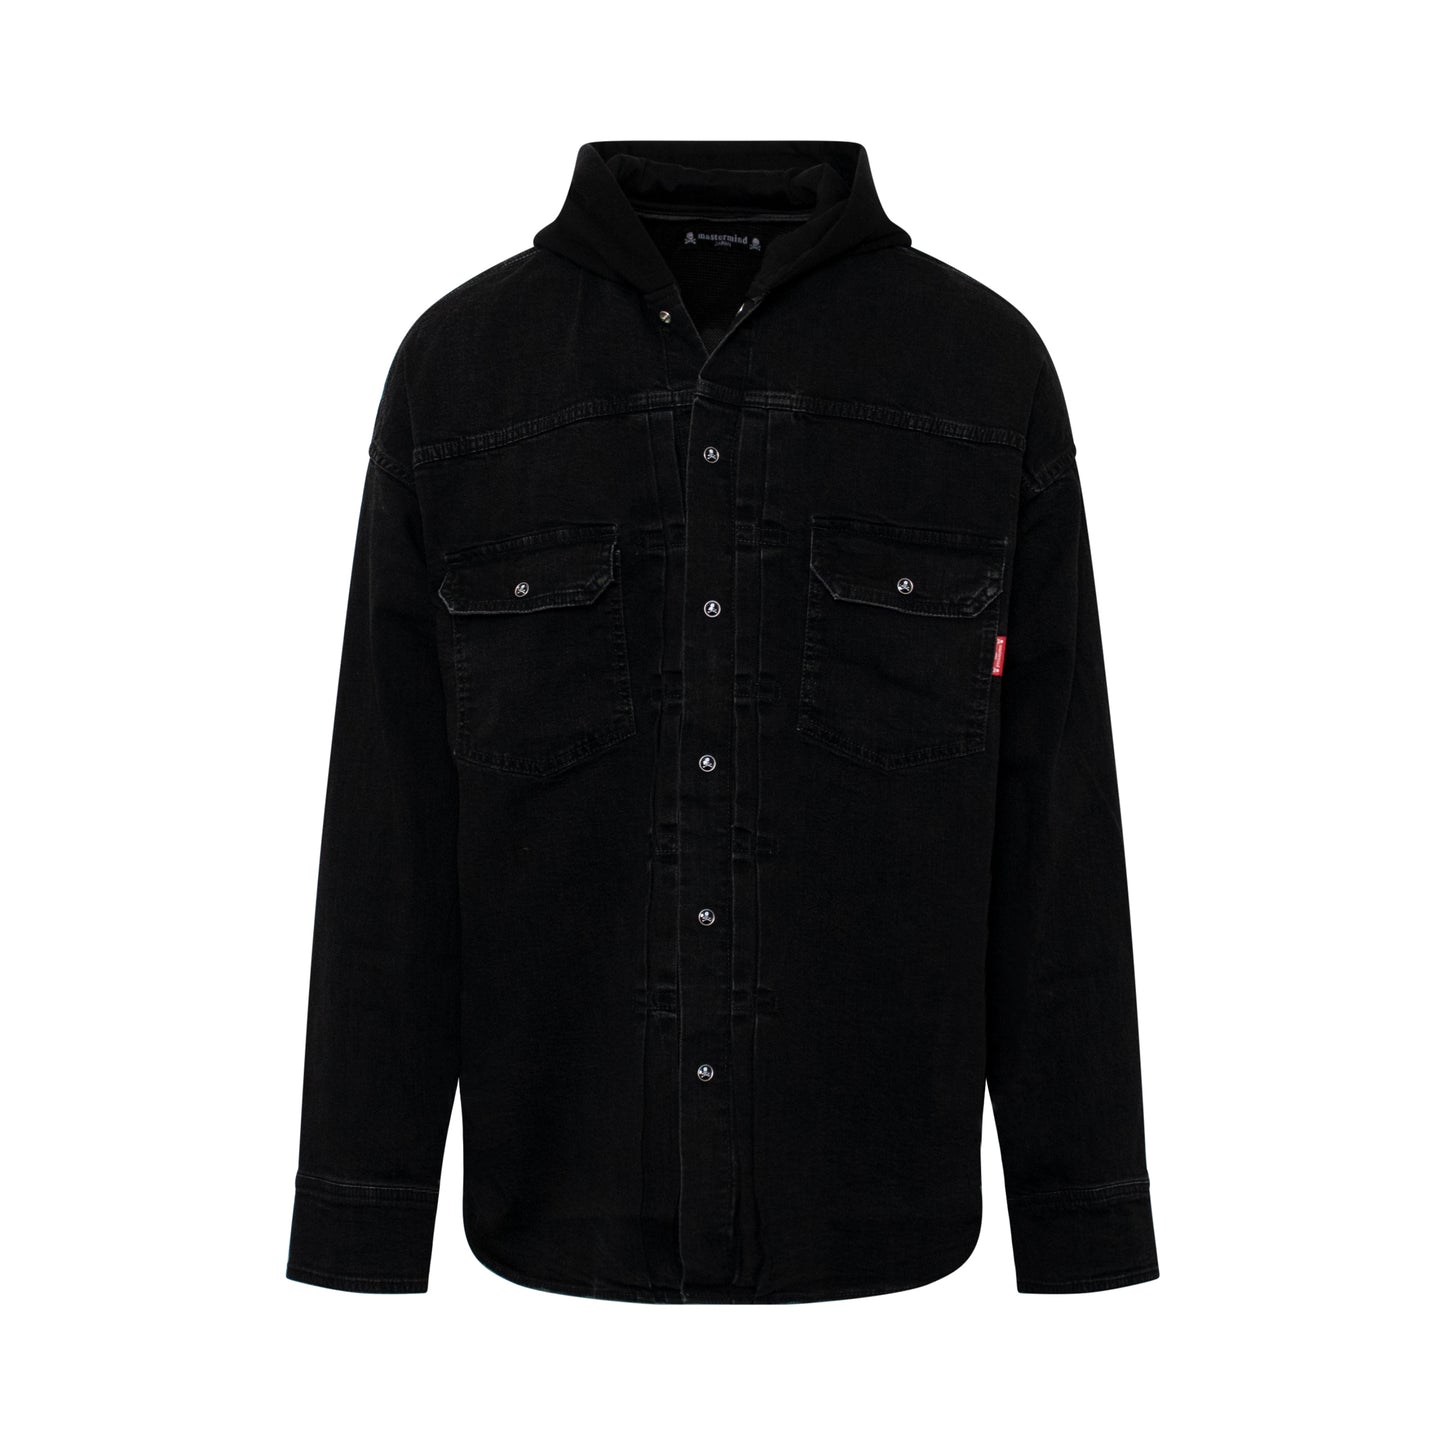 Mastermind Japan Shirt in Black